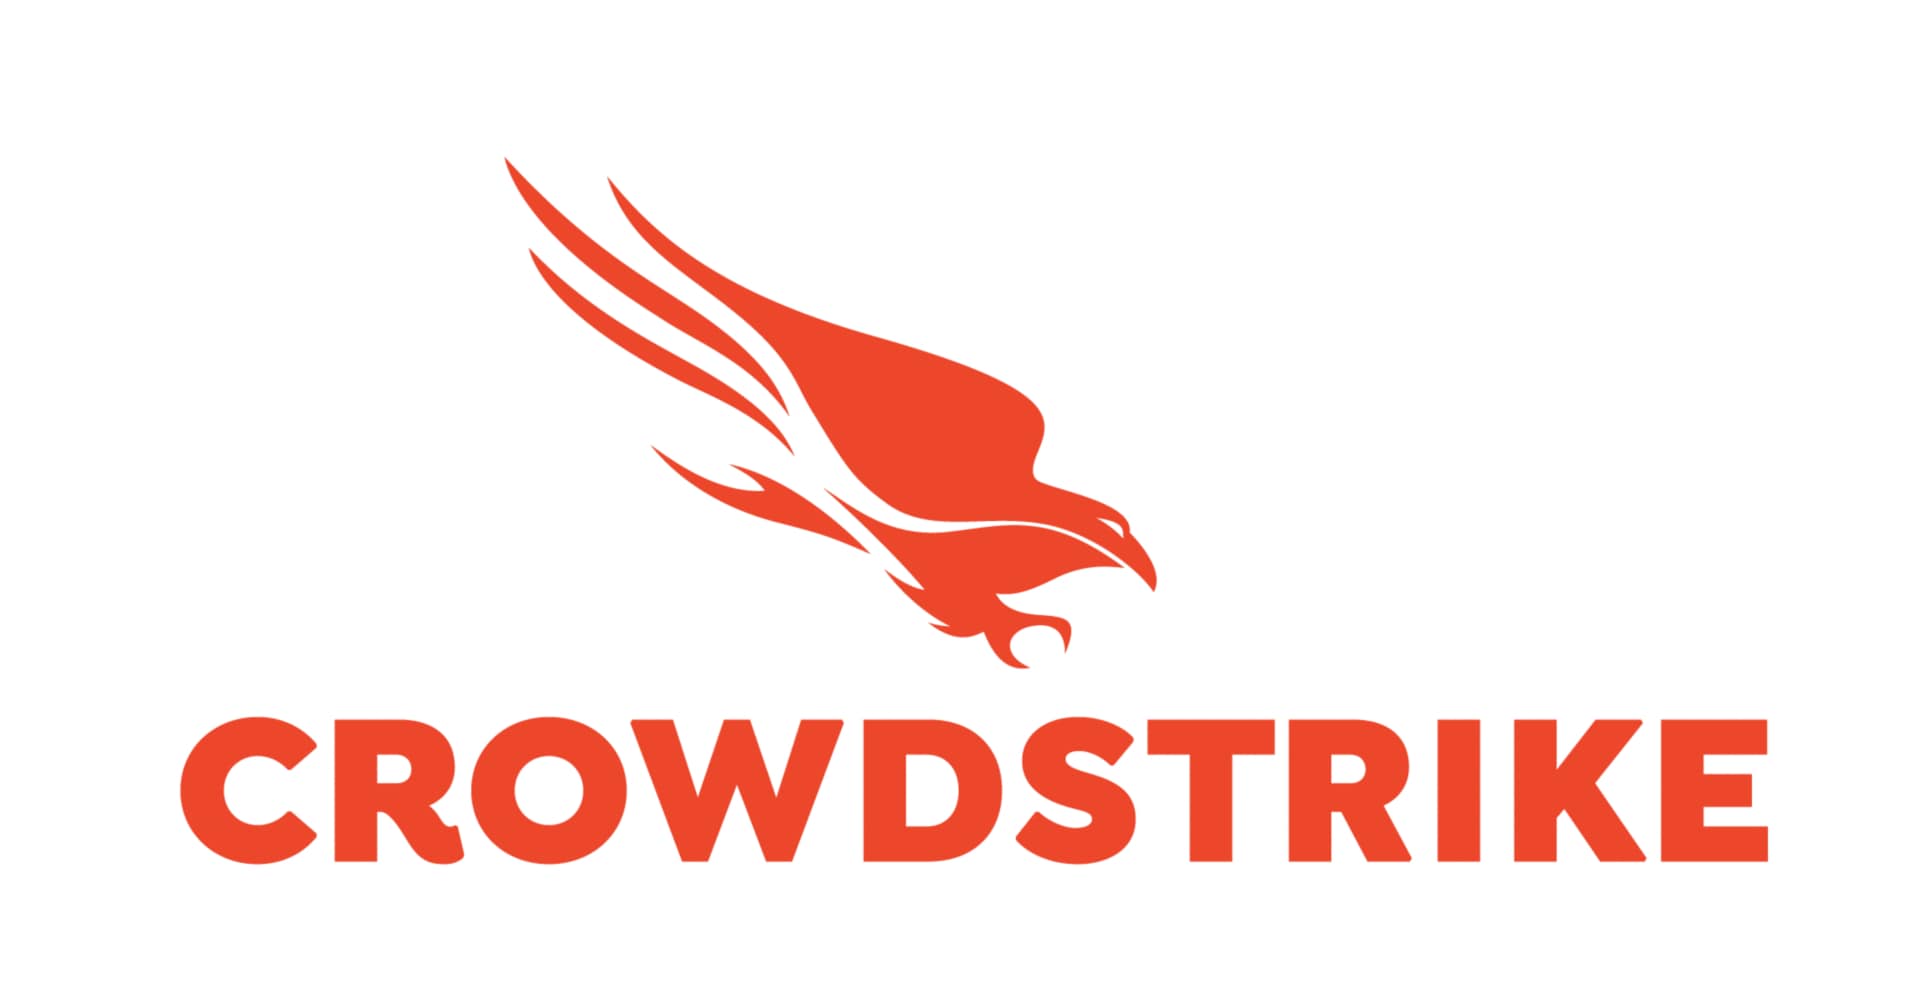 CrowdStrike 36-Month Falcon Firewall Management